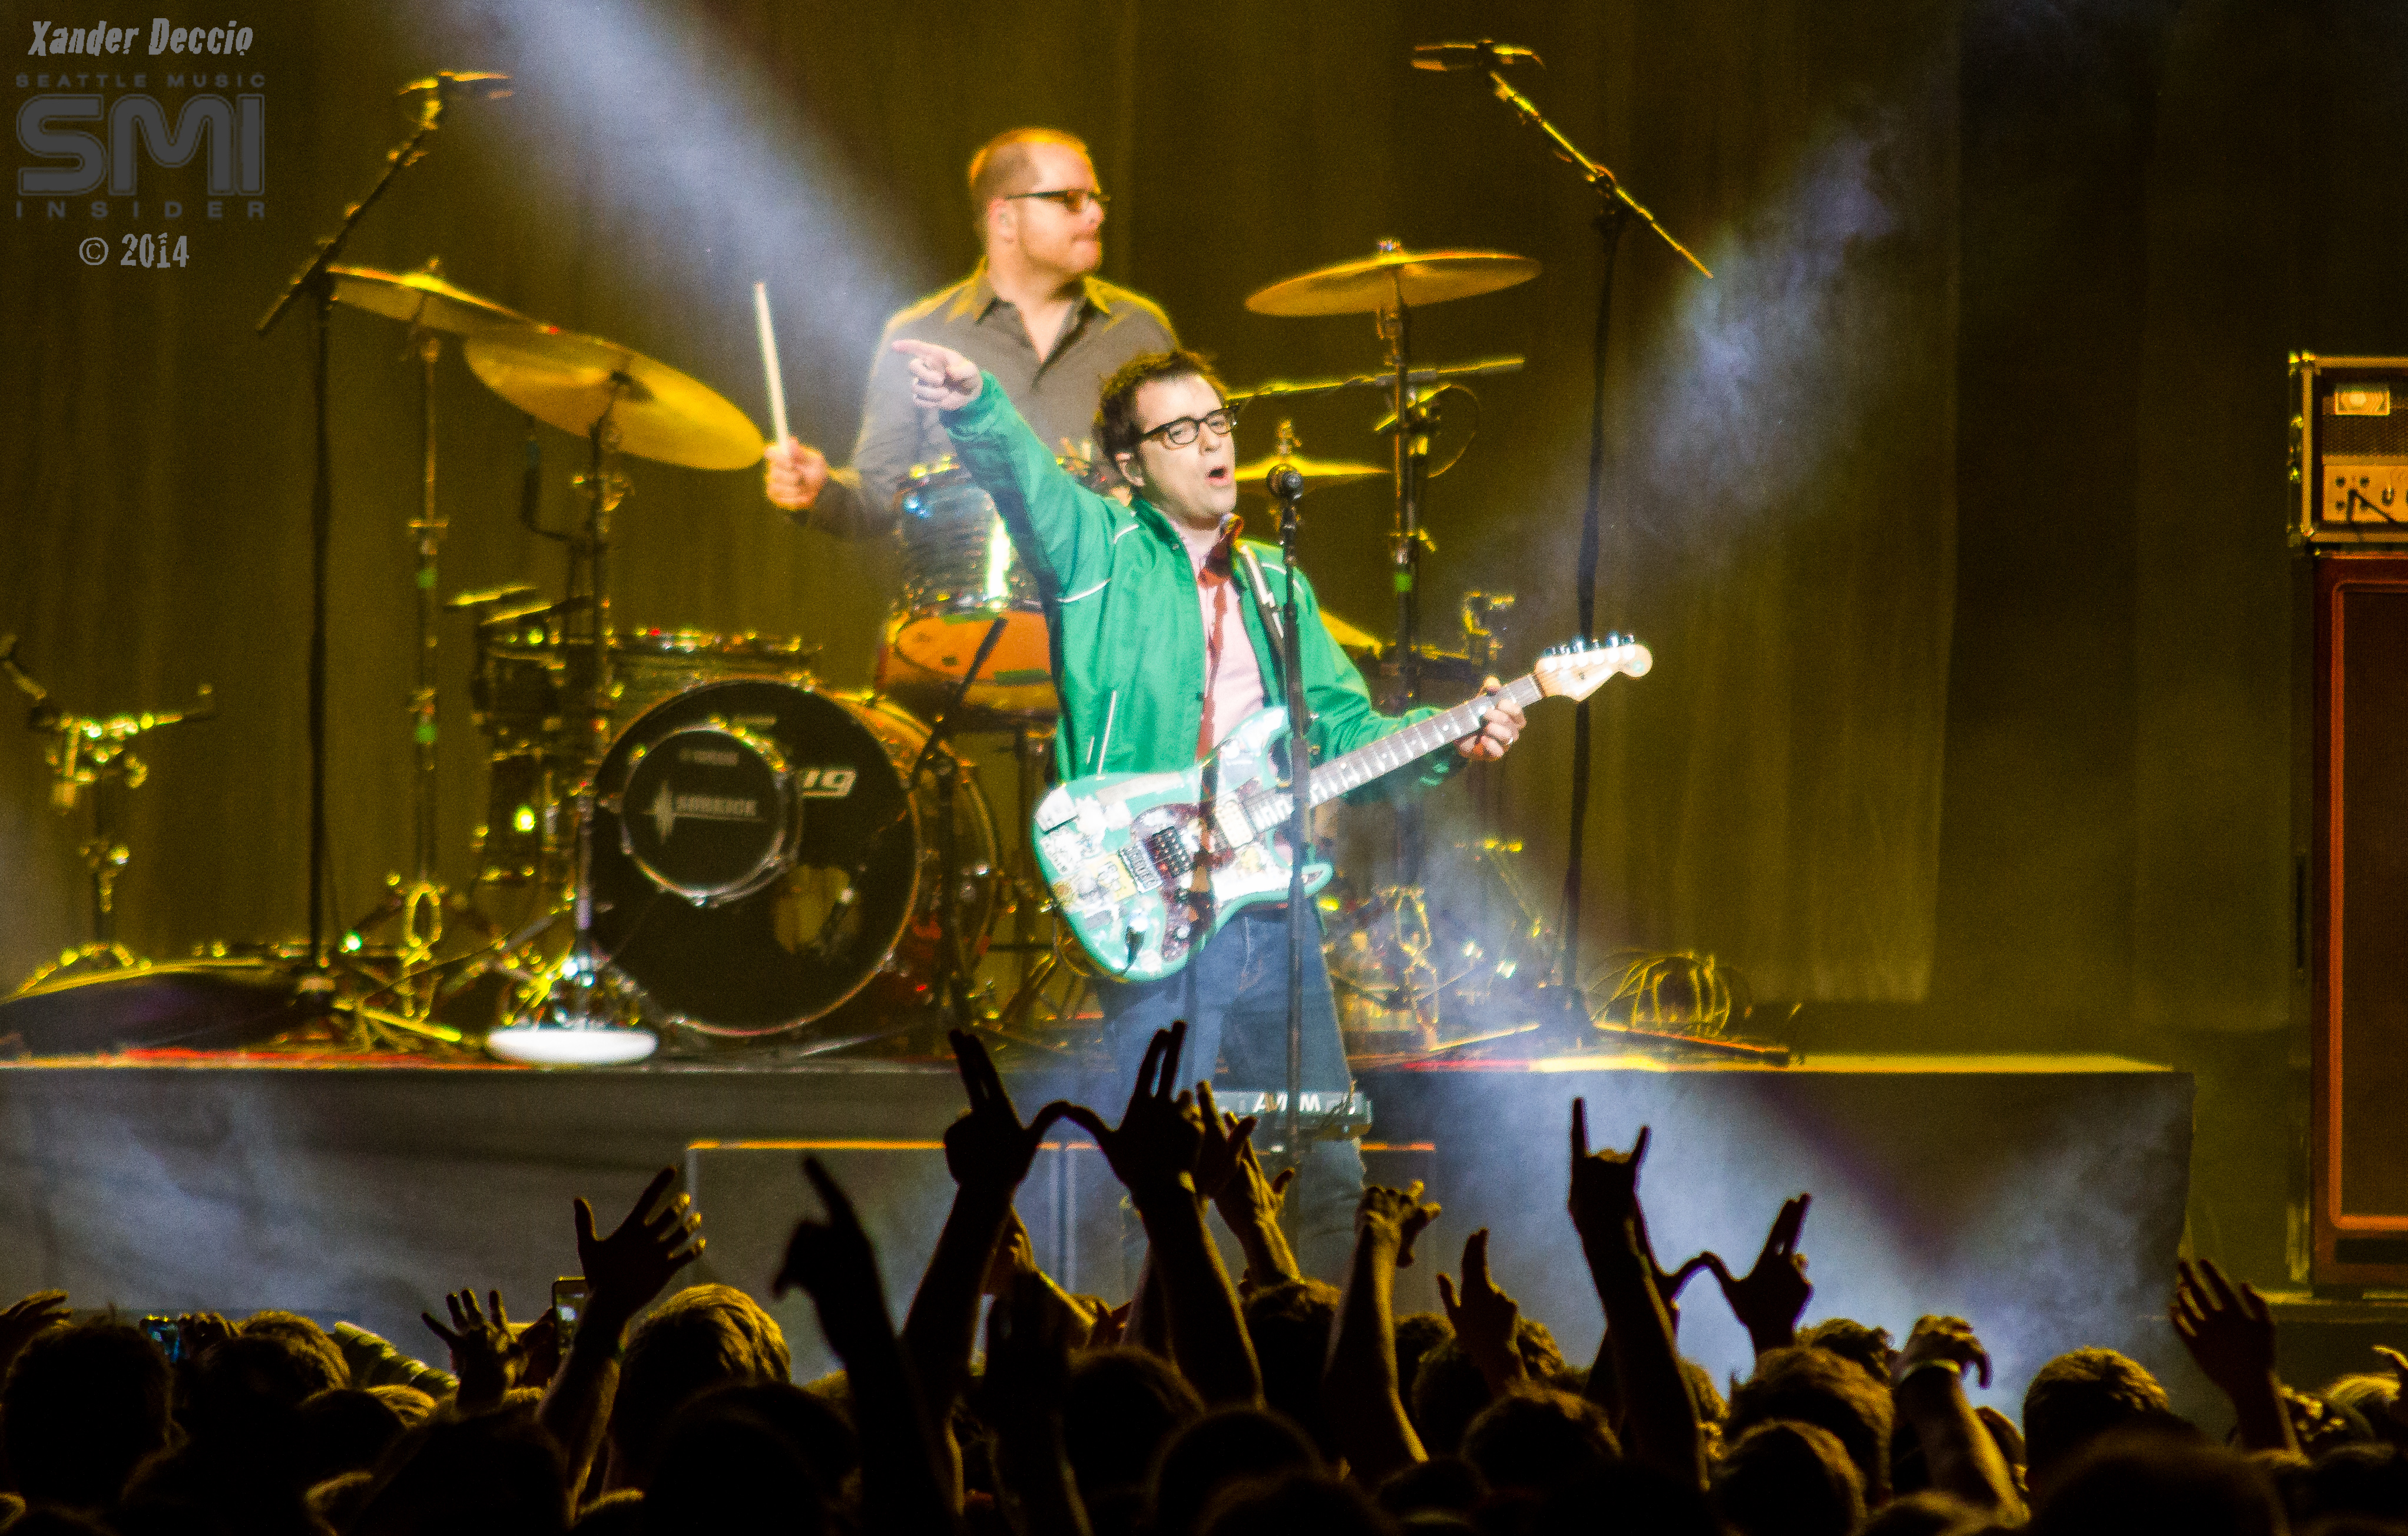 Weezer @ Deck The Hall Ball 2014 – Photo By Xander Deccio